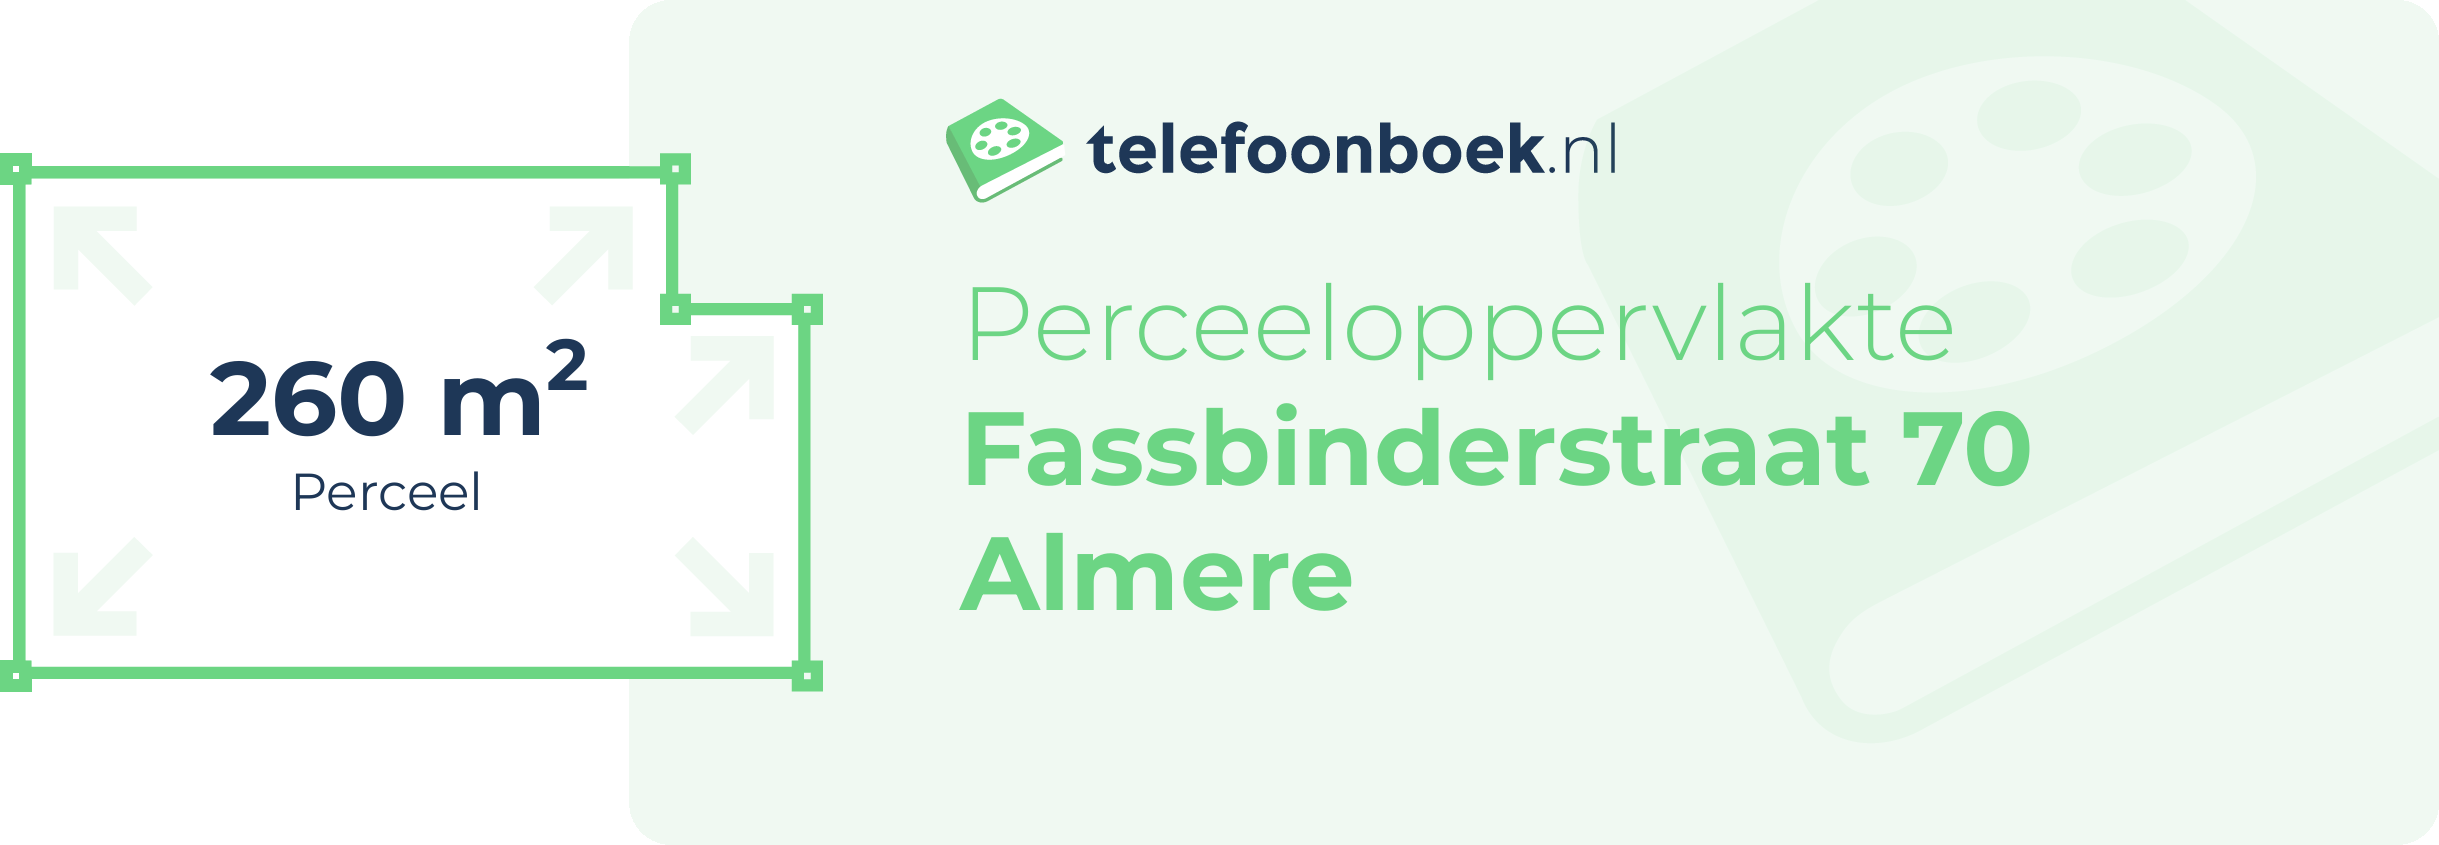 Perceeloppervlakte Fassbinderstraat 70 Almere